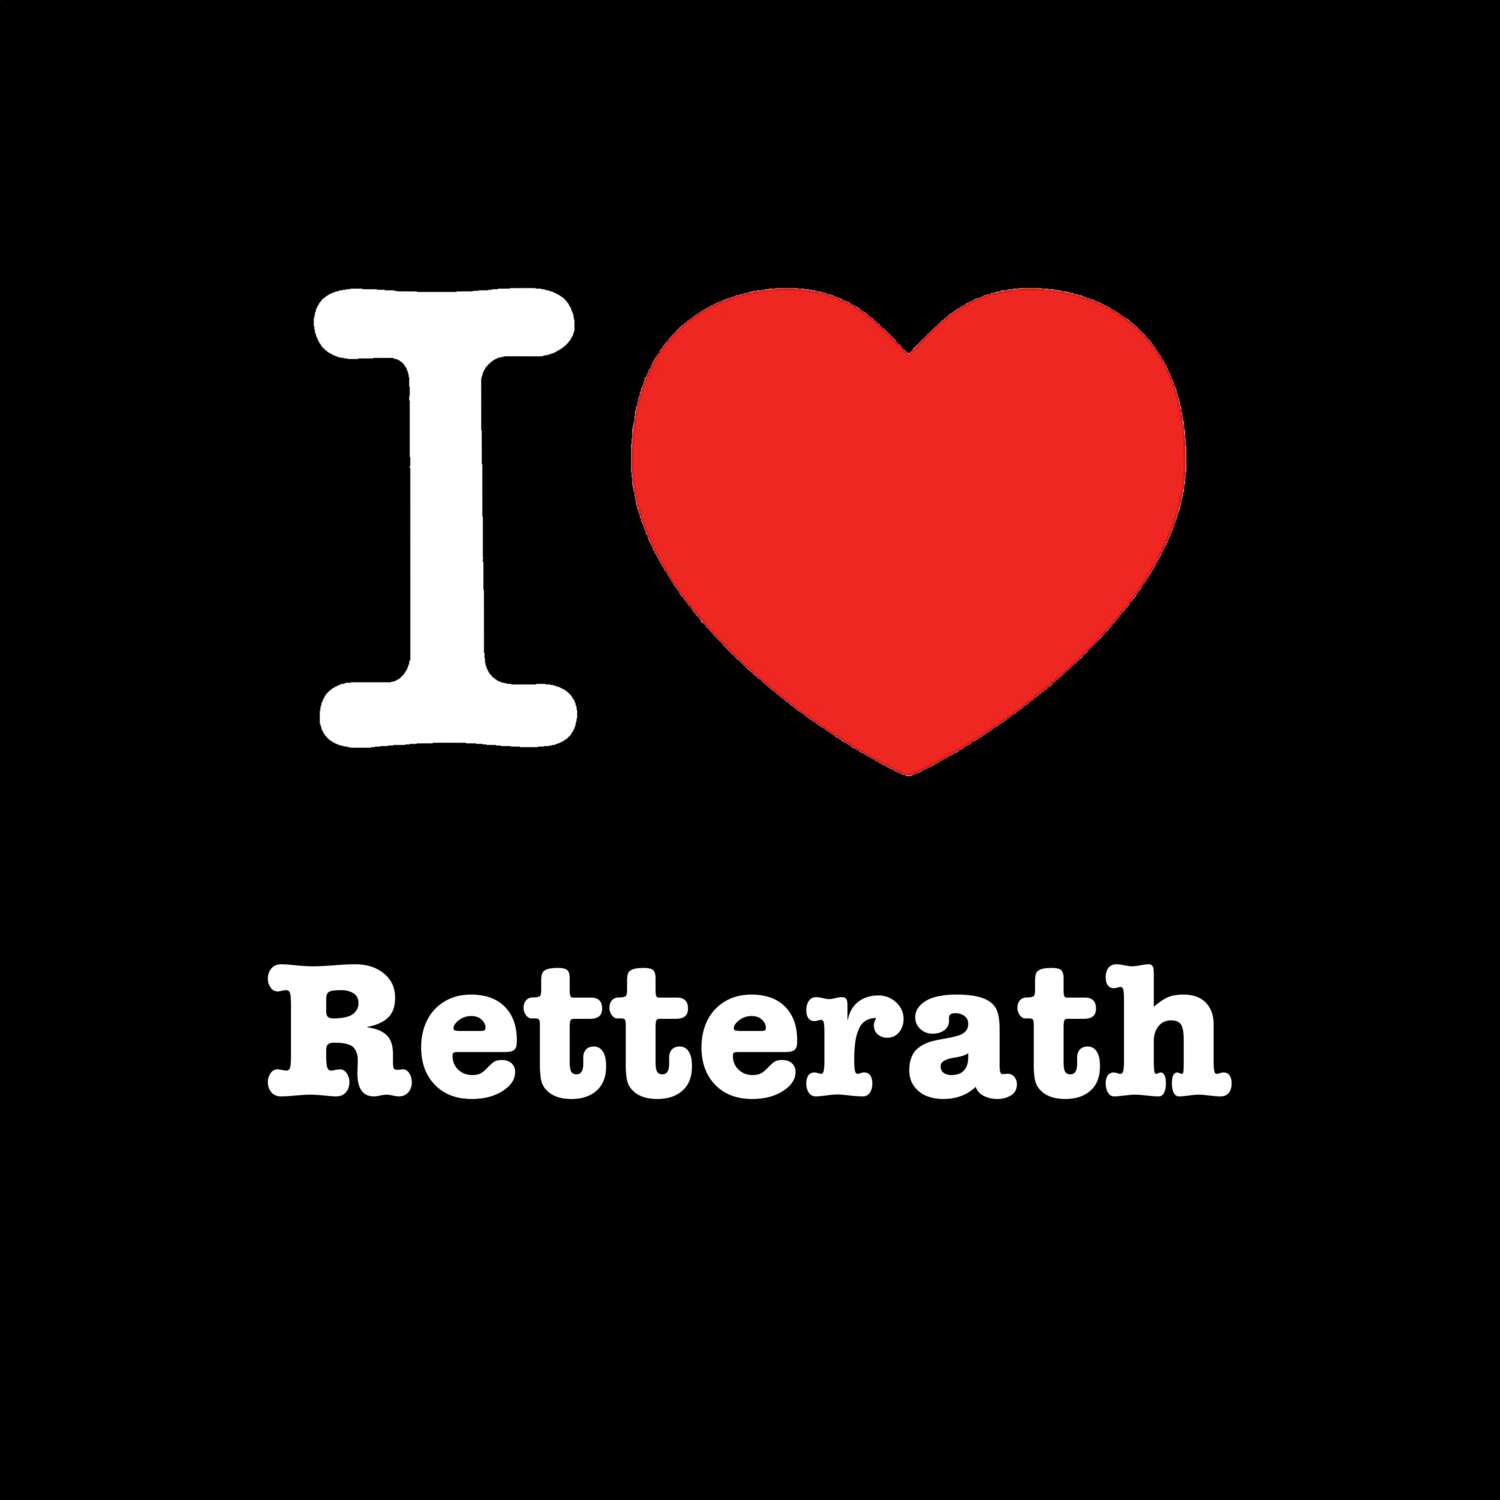 Retterath T-Shirt »I love«